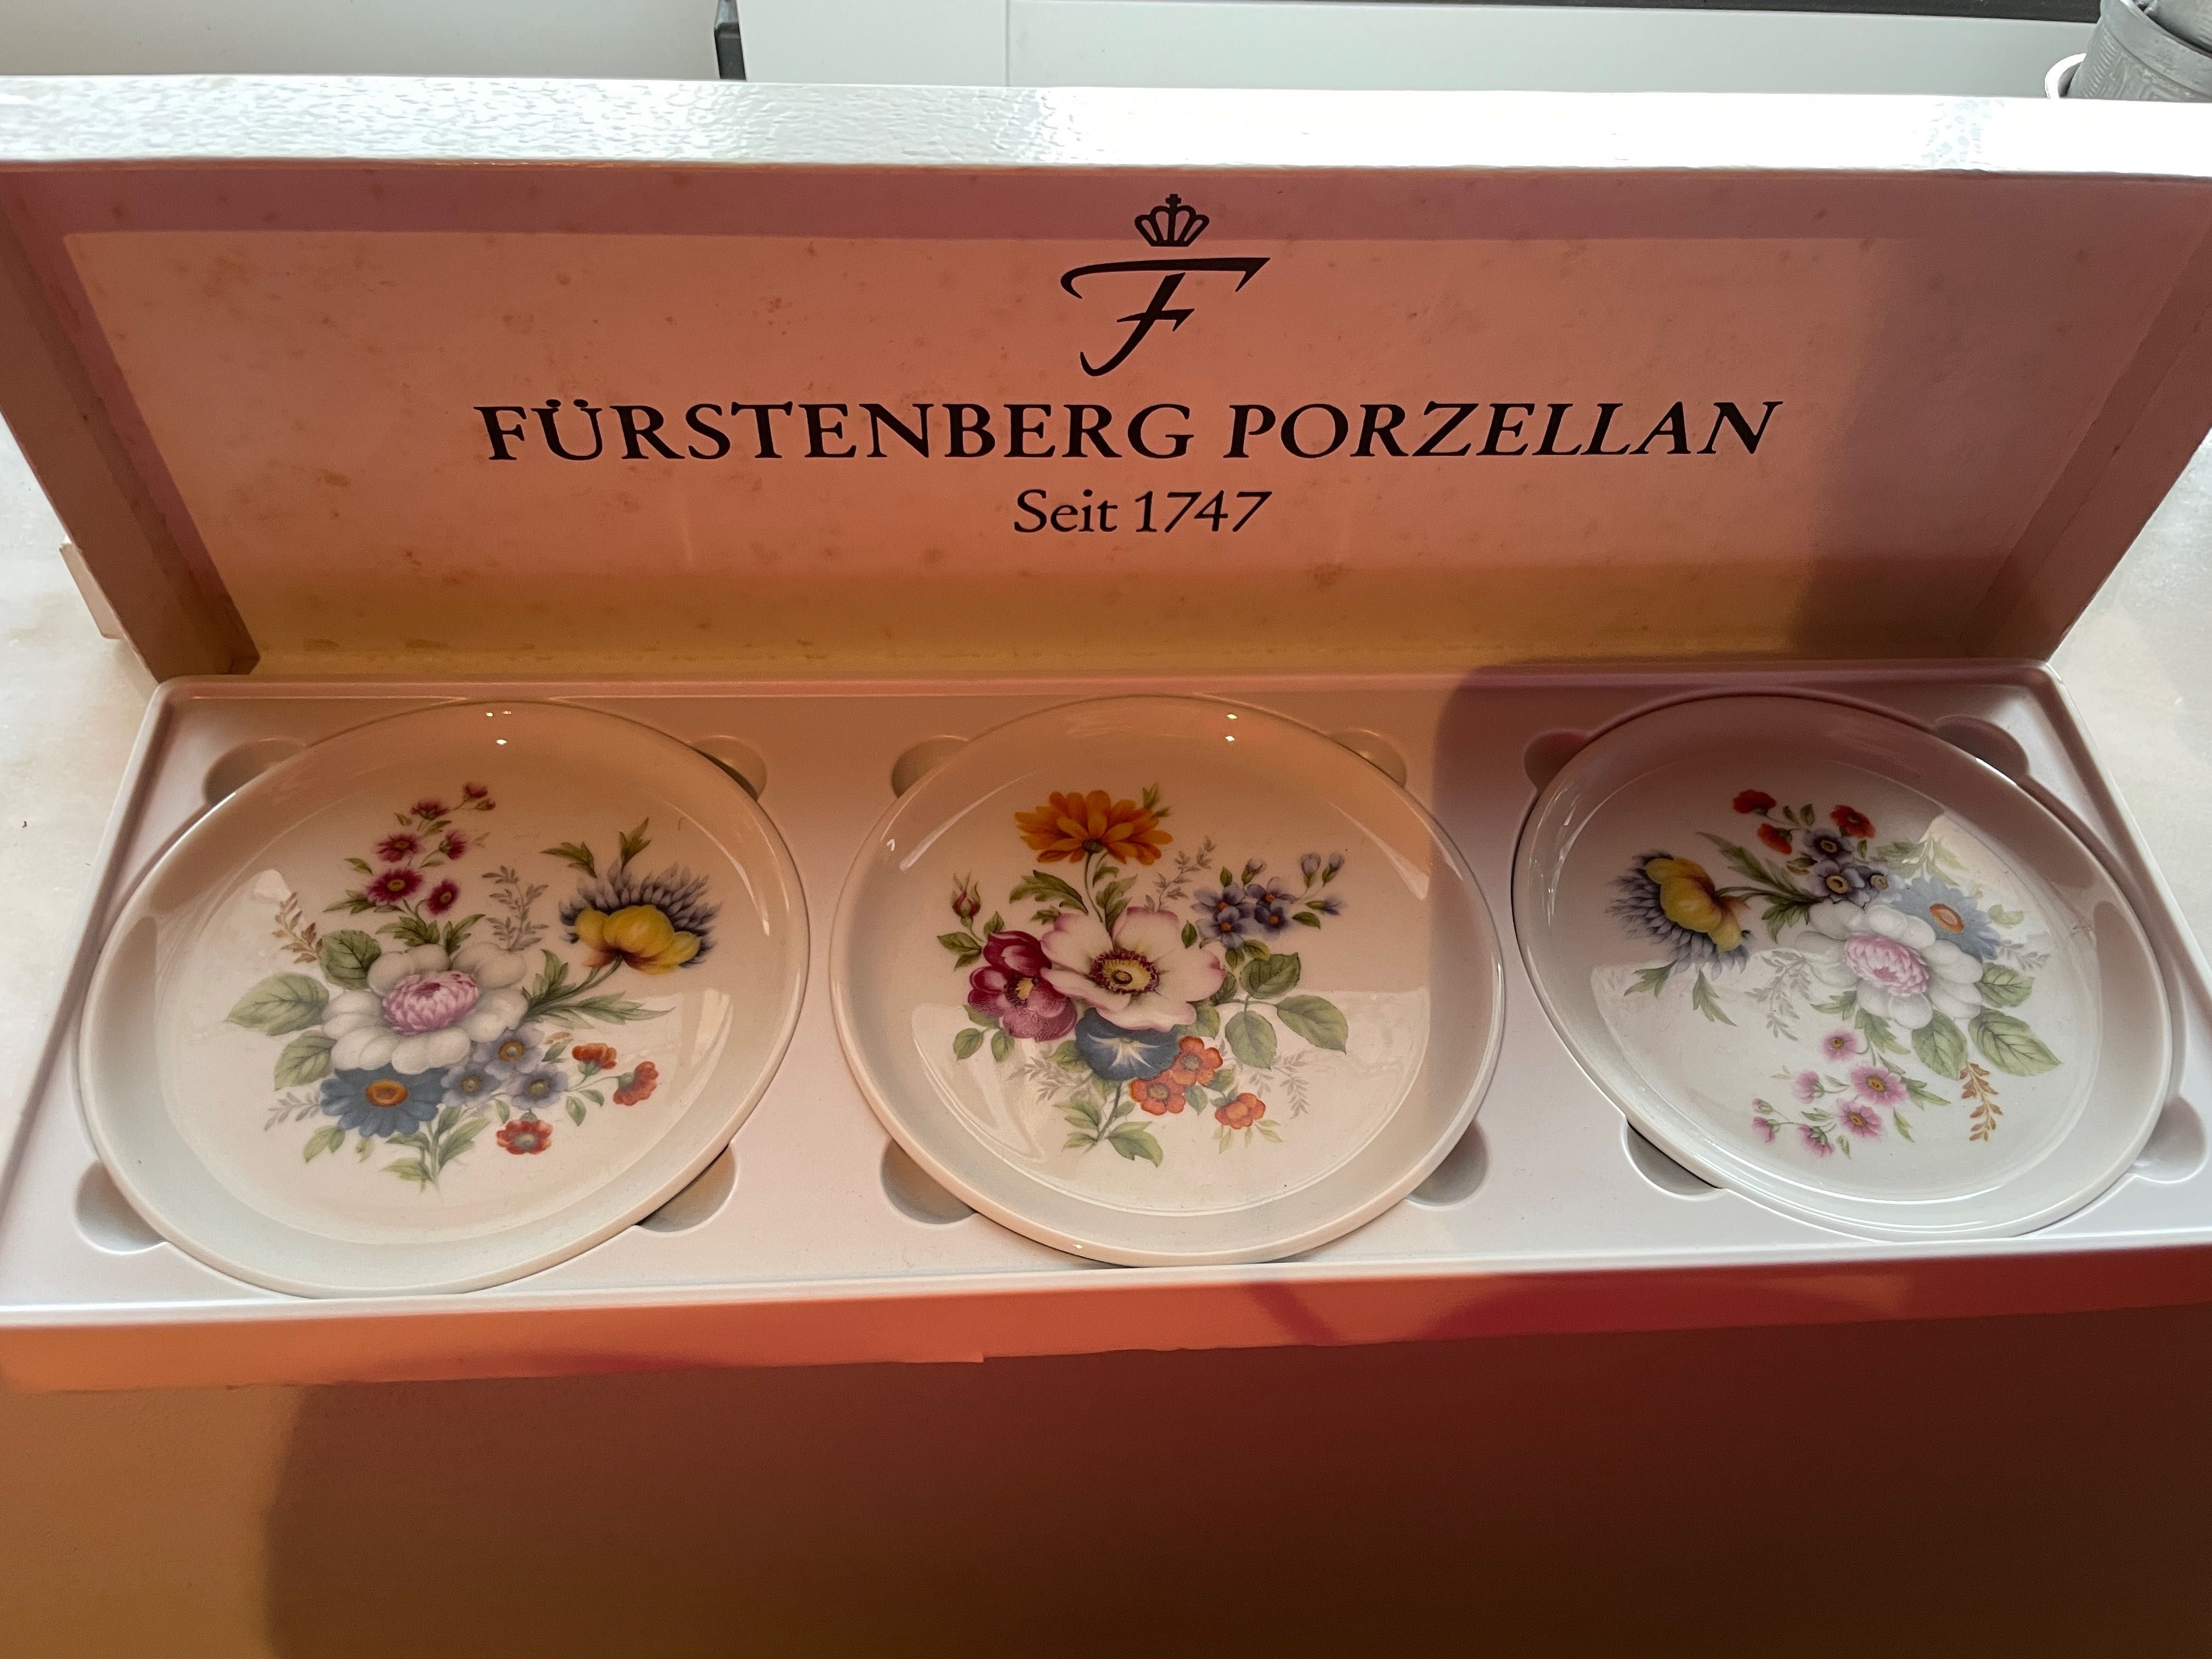 Set incrível de porcelana da marca Fürstenberg Porzellan